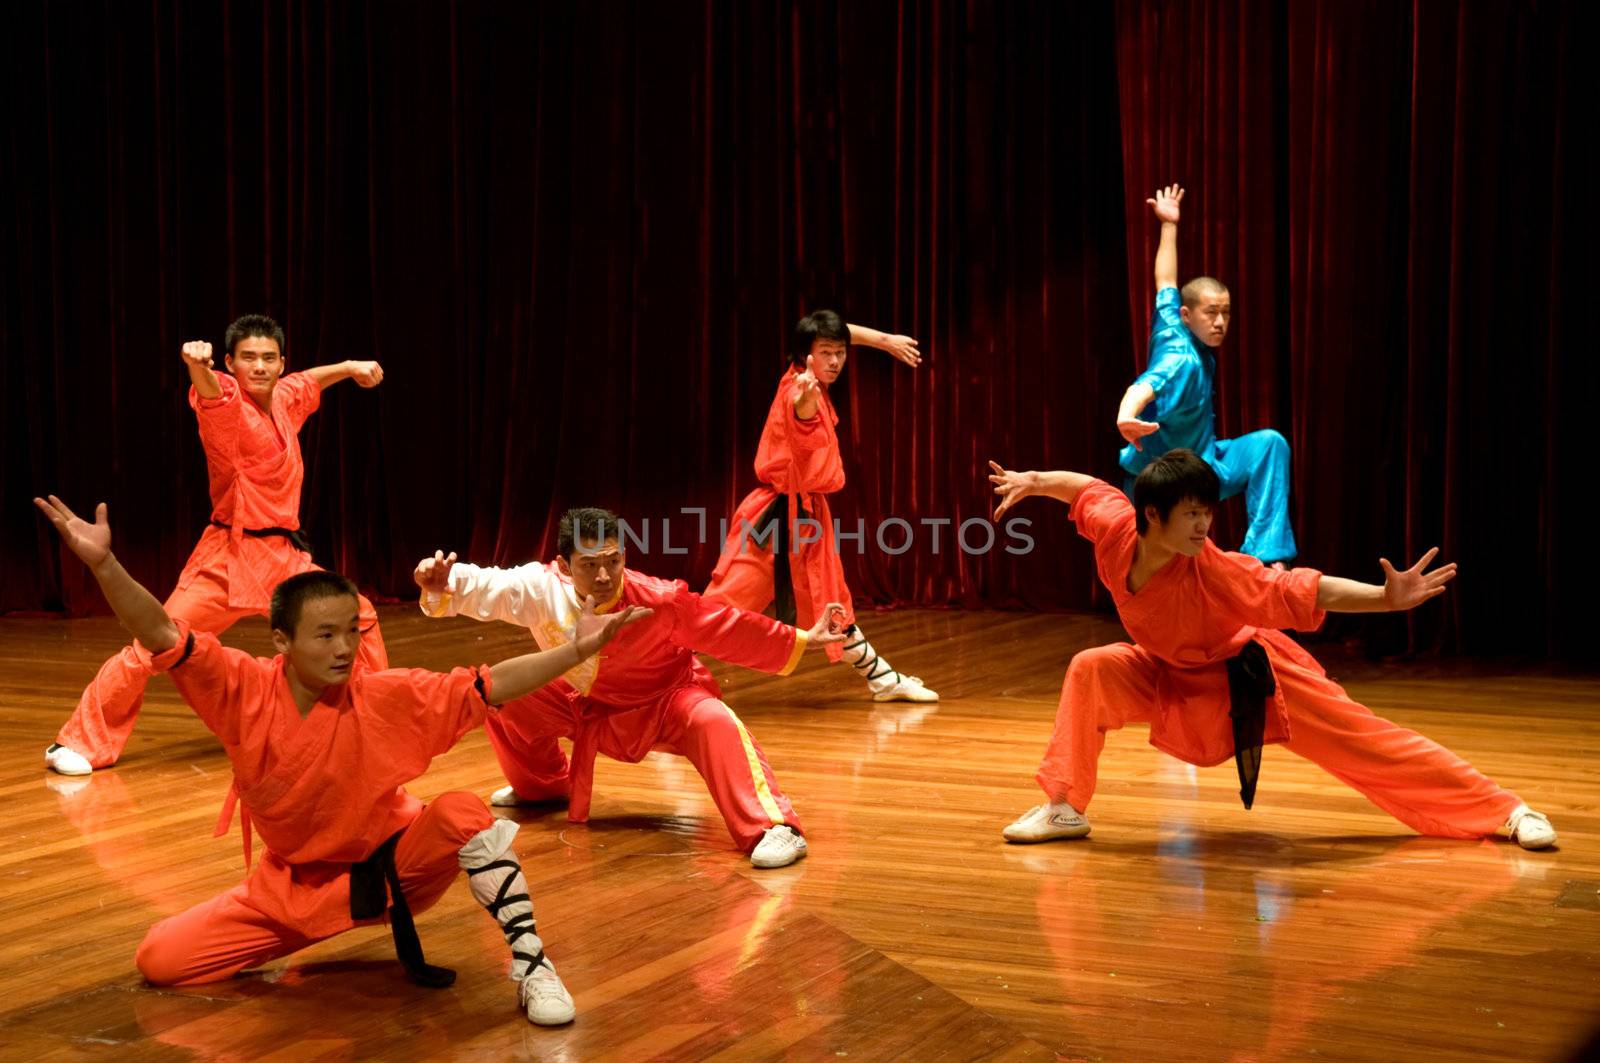 MACAU - APRIL 25: Performing Chinese kung fu (wu shu) with pose of fight, April 25, 2009, Macau, China